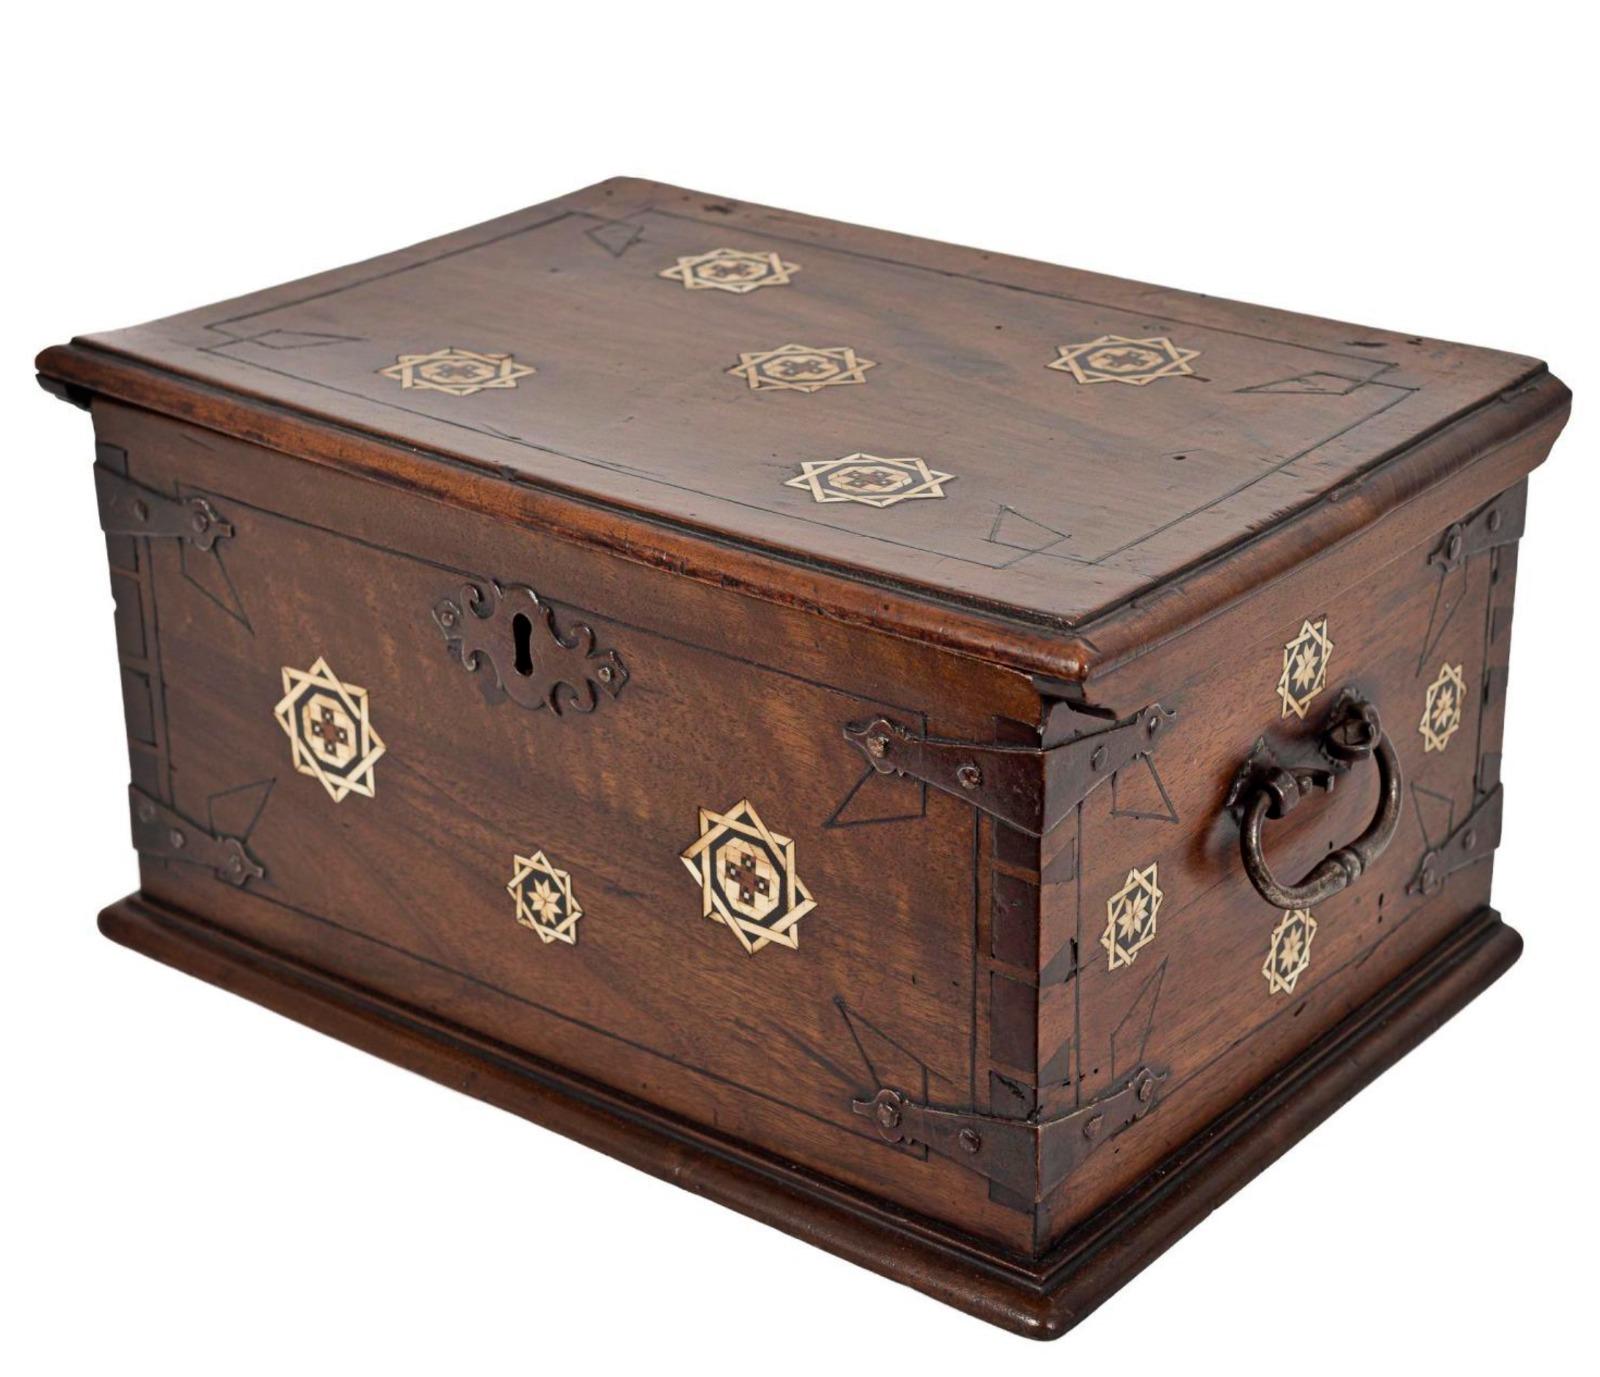 Hand-Crafted Walnut Wood Box with Geometric Inlay in Bone and Ebony Spain 17th Century